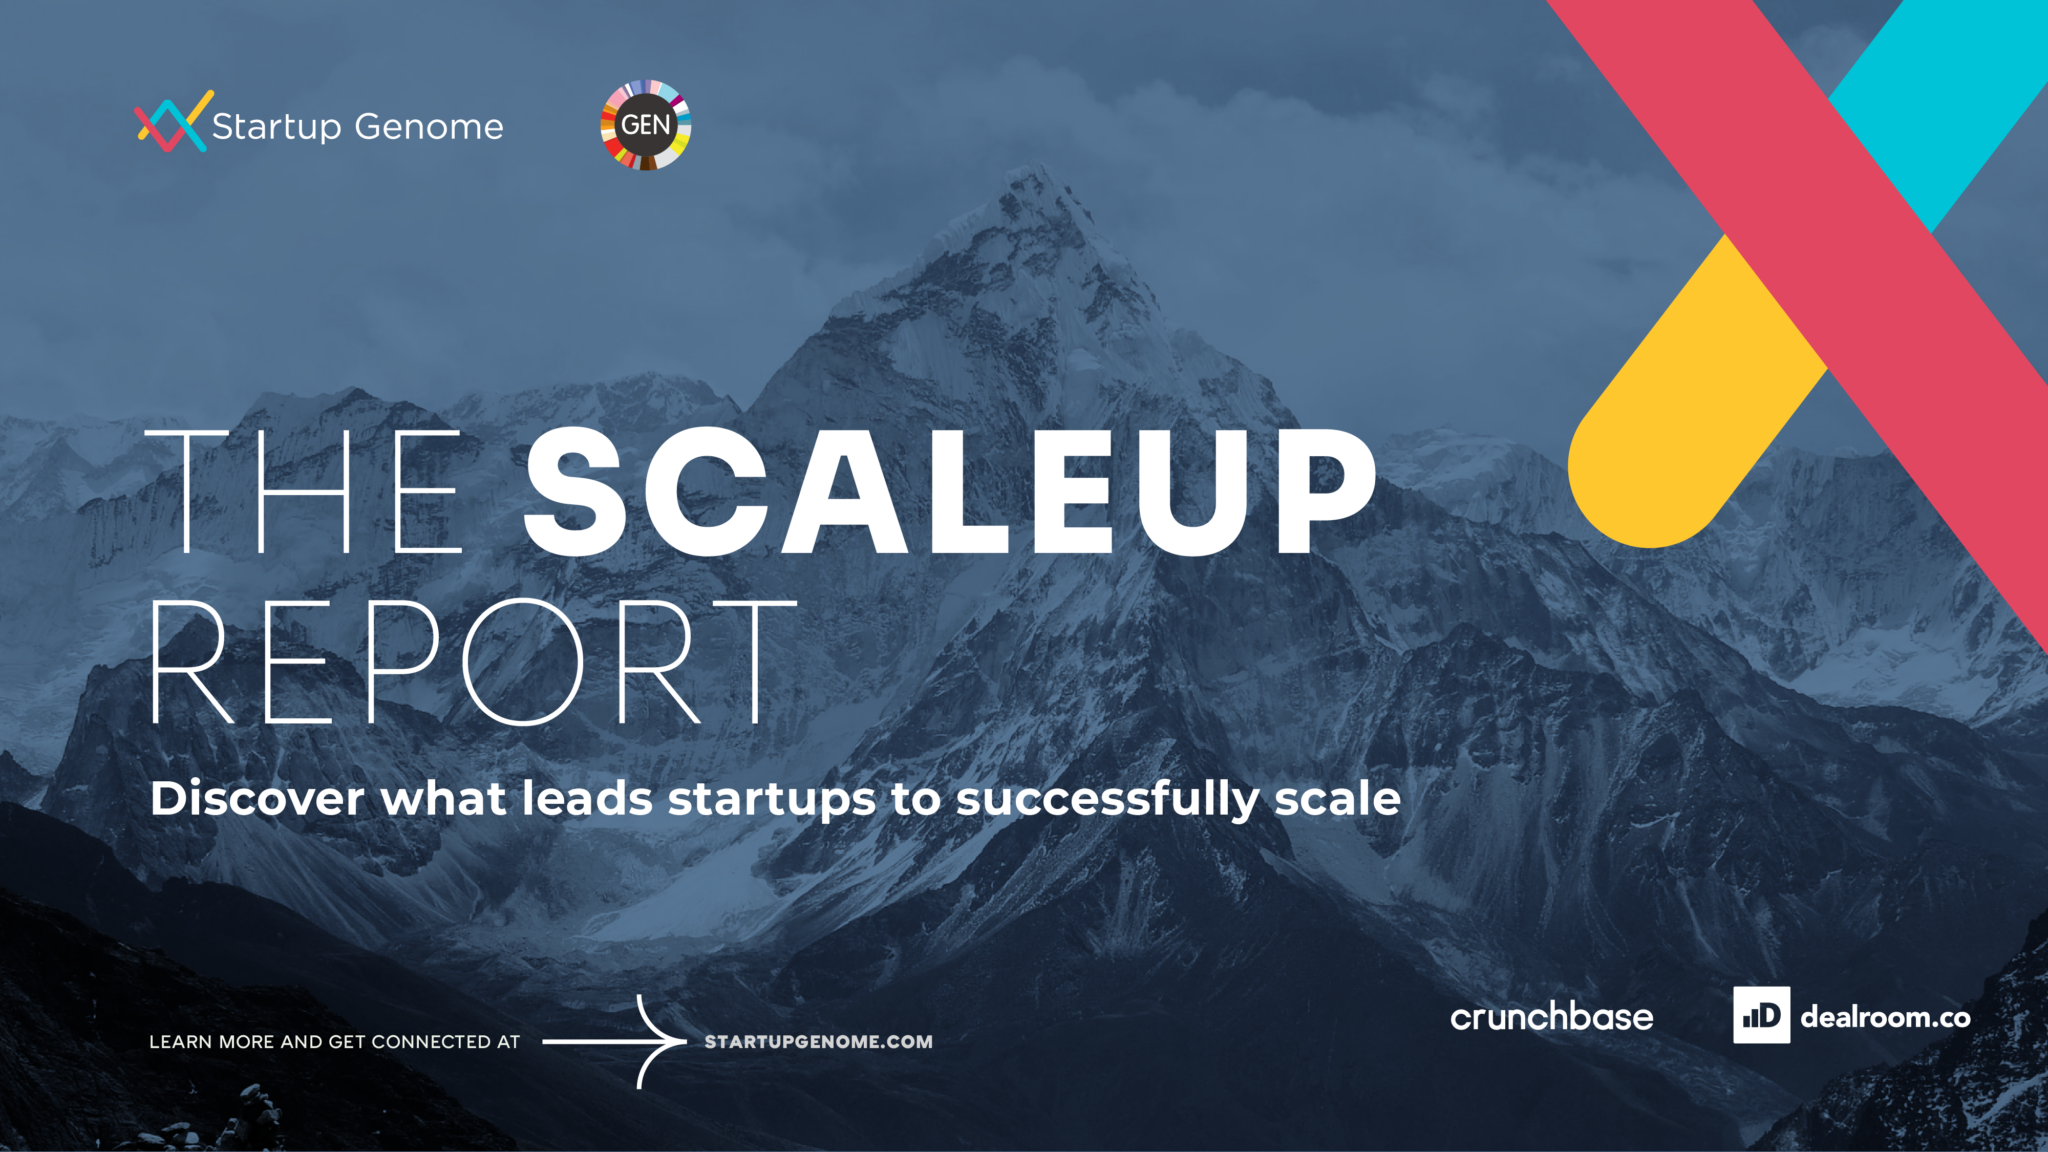 Scaleup Report